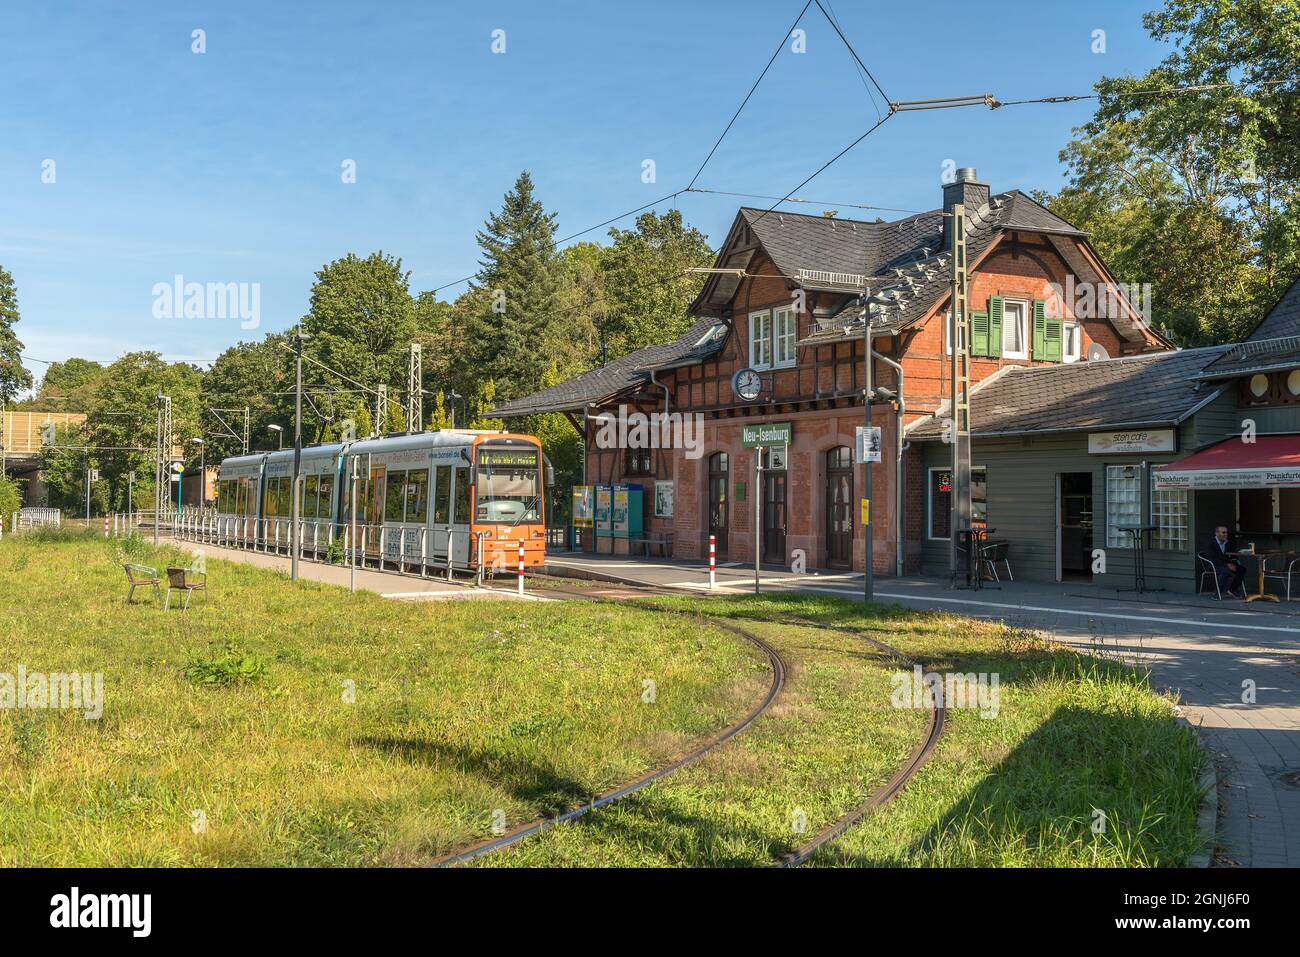 Tram stop of the former Waldbahn in Neu Isenburg, Germany Stock Photo